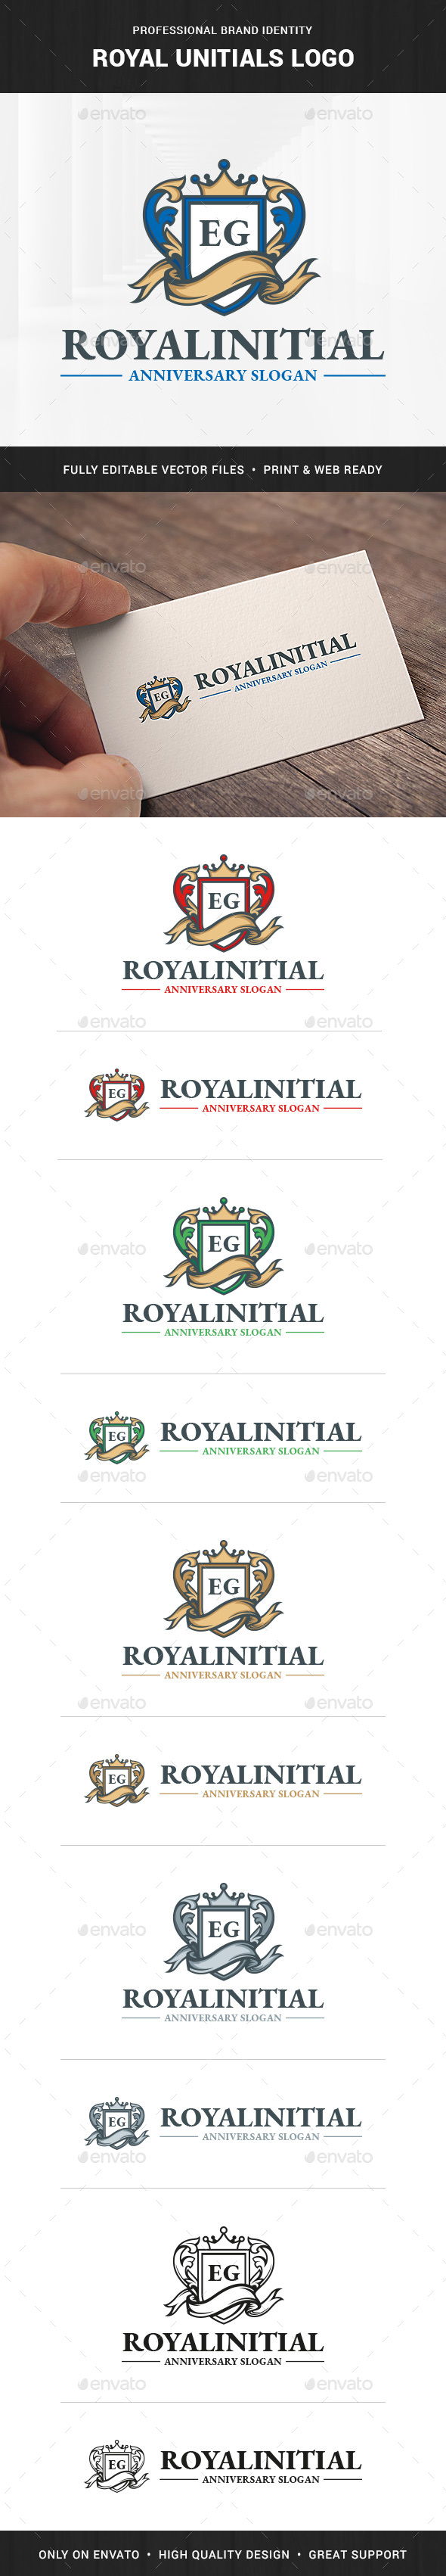 Royal Initials Logo Template